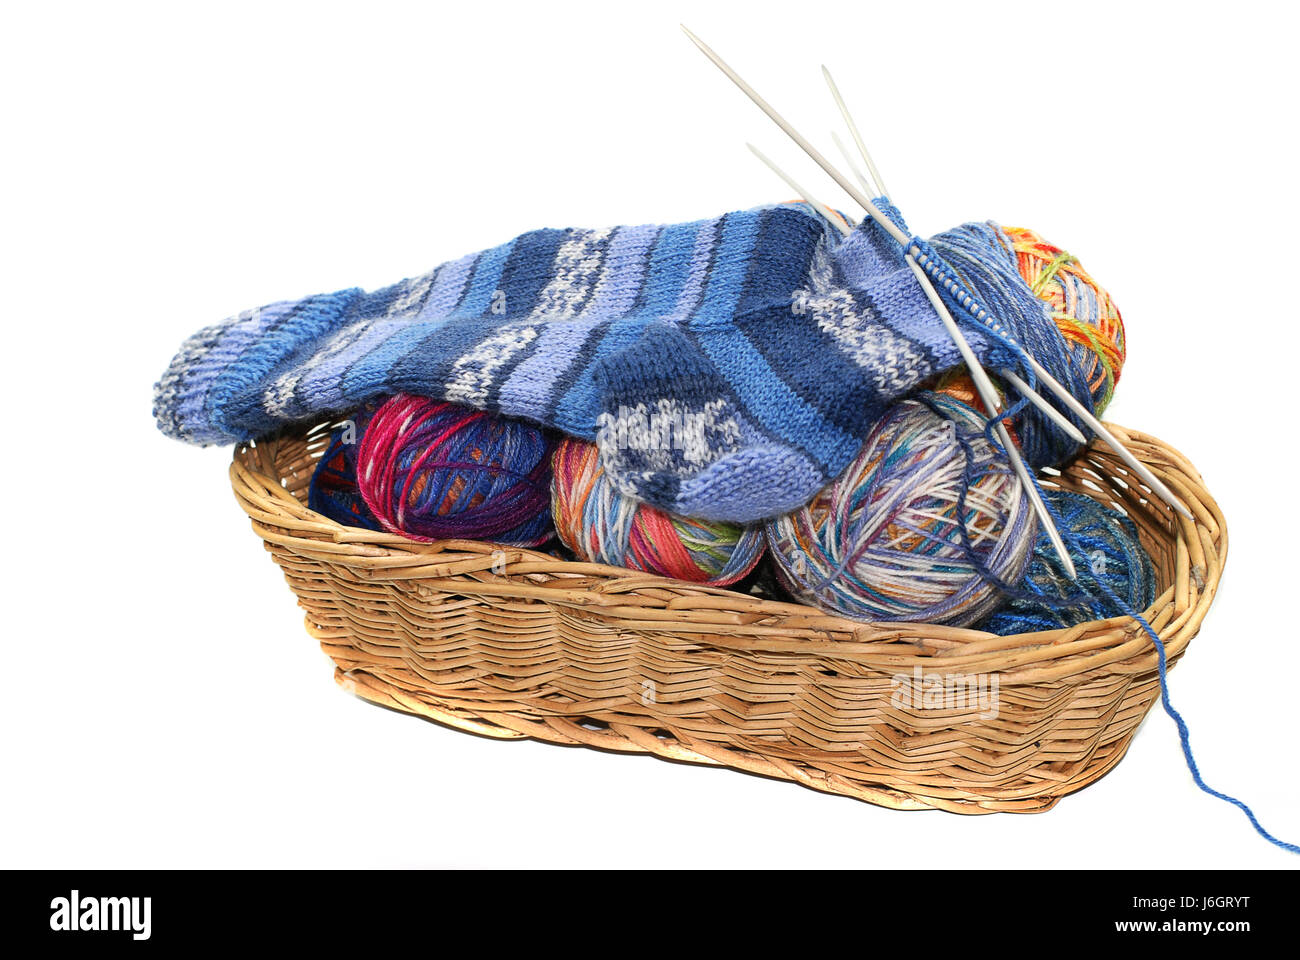 wool socks handicraft stockings knitted handiworks coloured colourful gorgeous Stock Photo